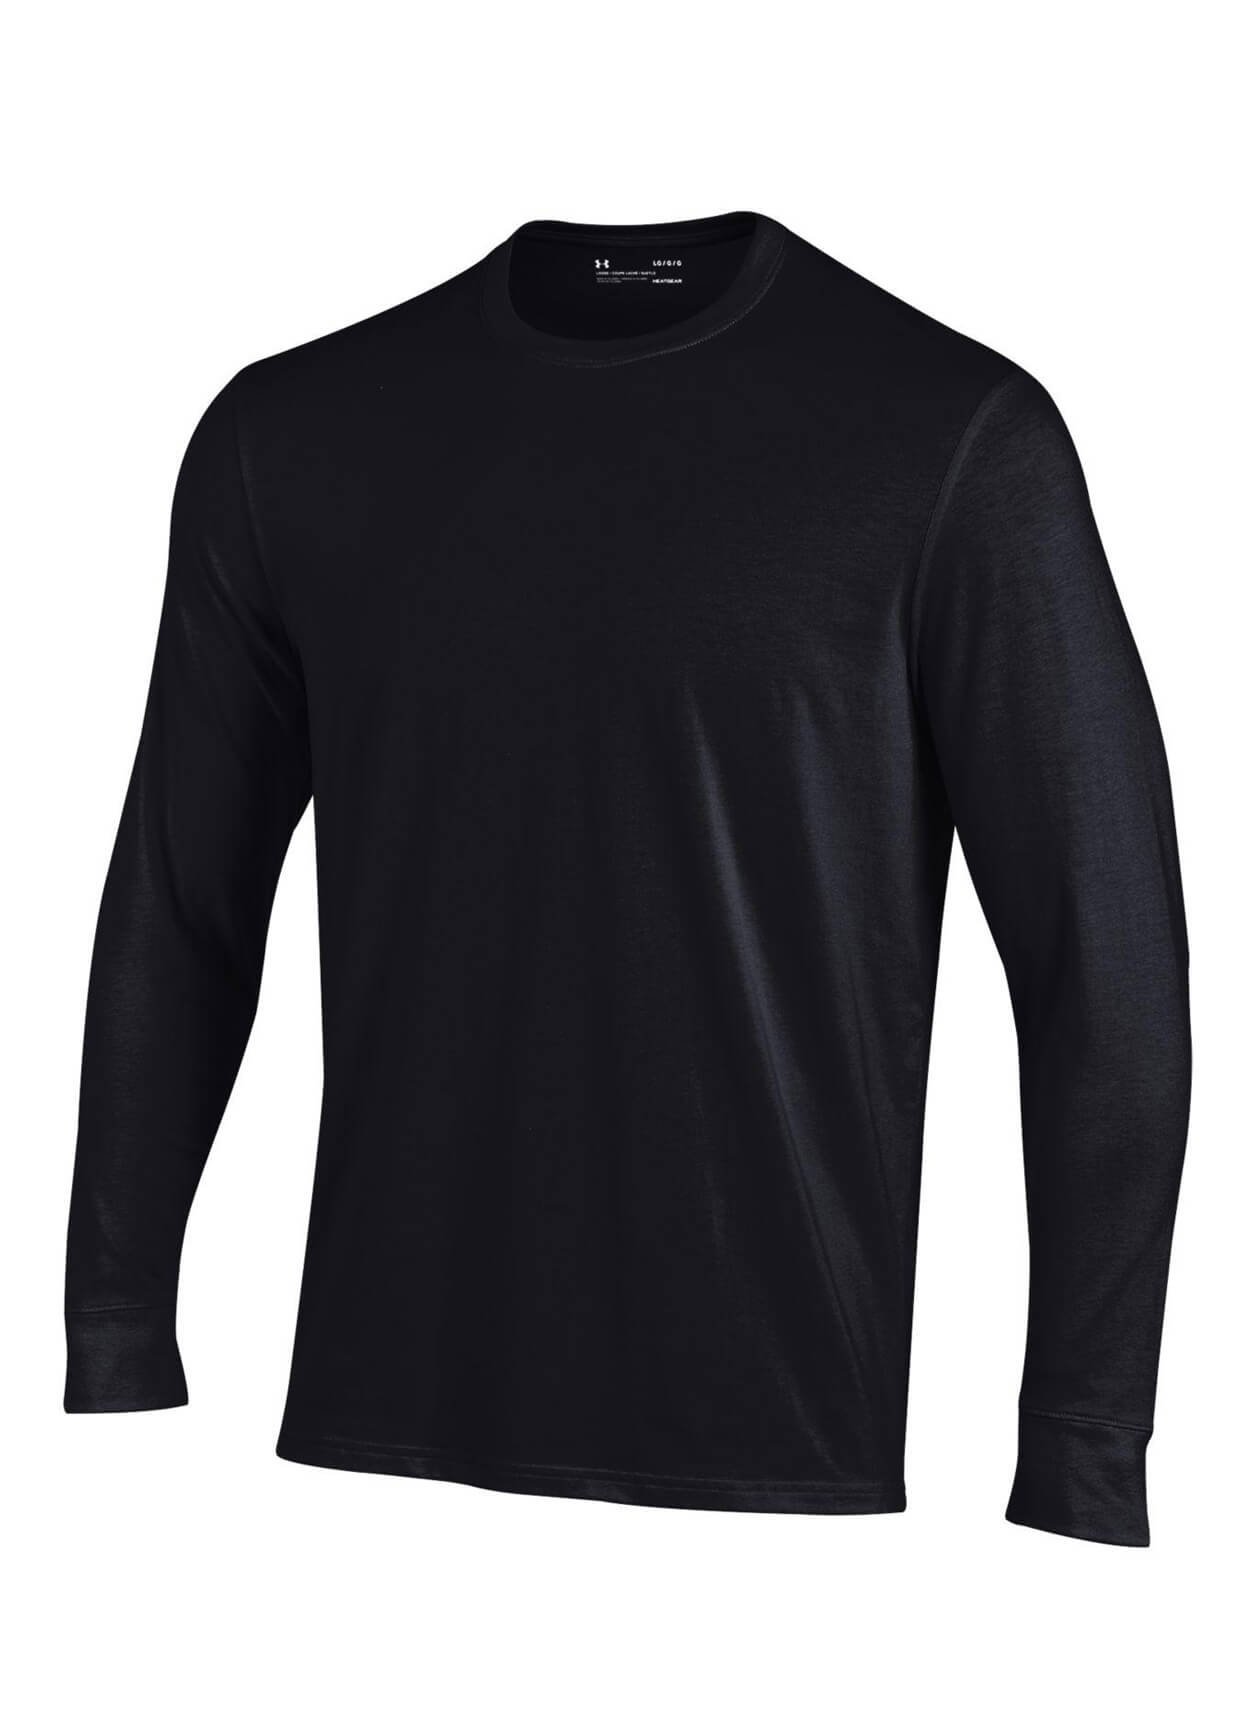 Under Armour UM0707 - Men's Performance Long-Sleeve Cotton T-Shirt